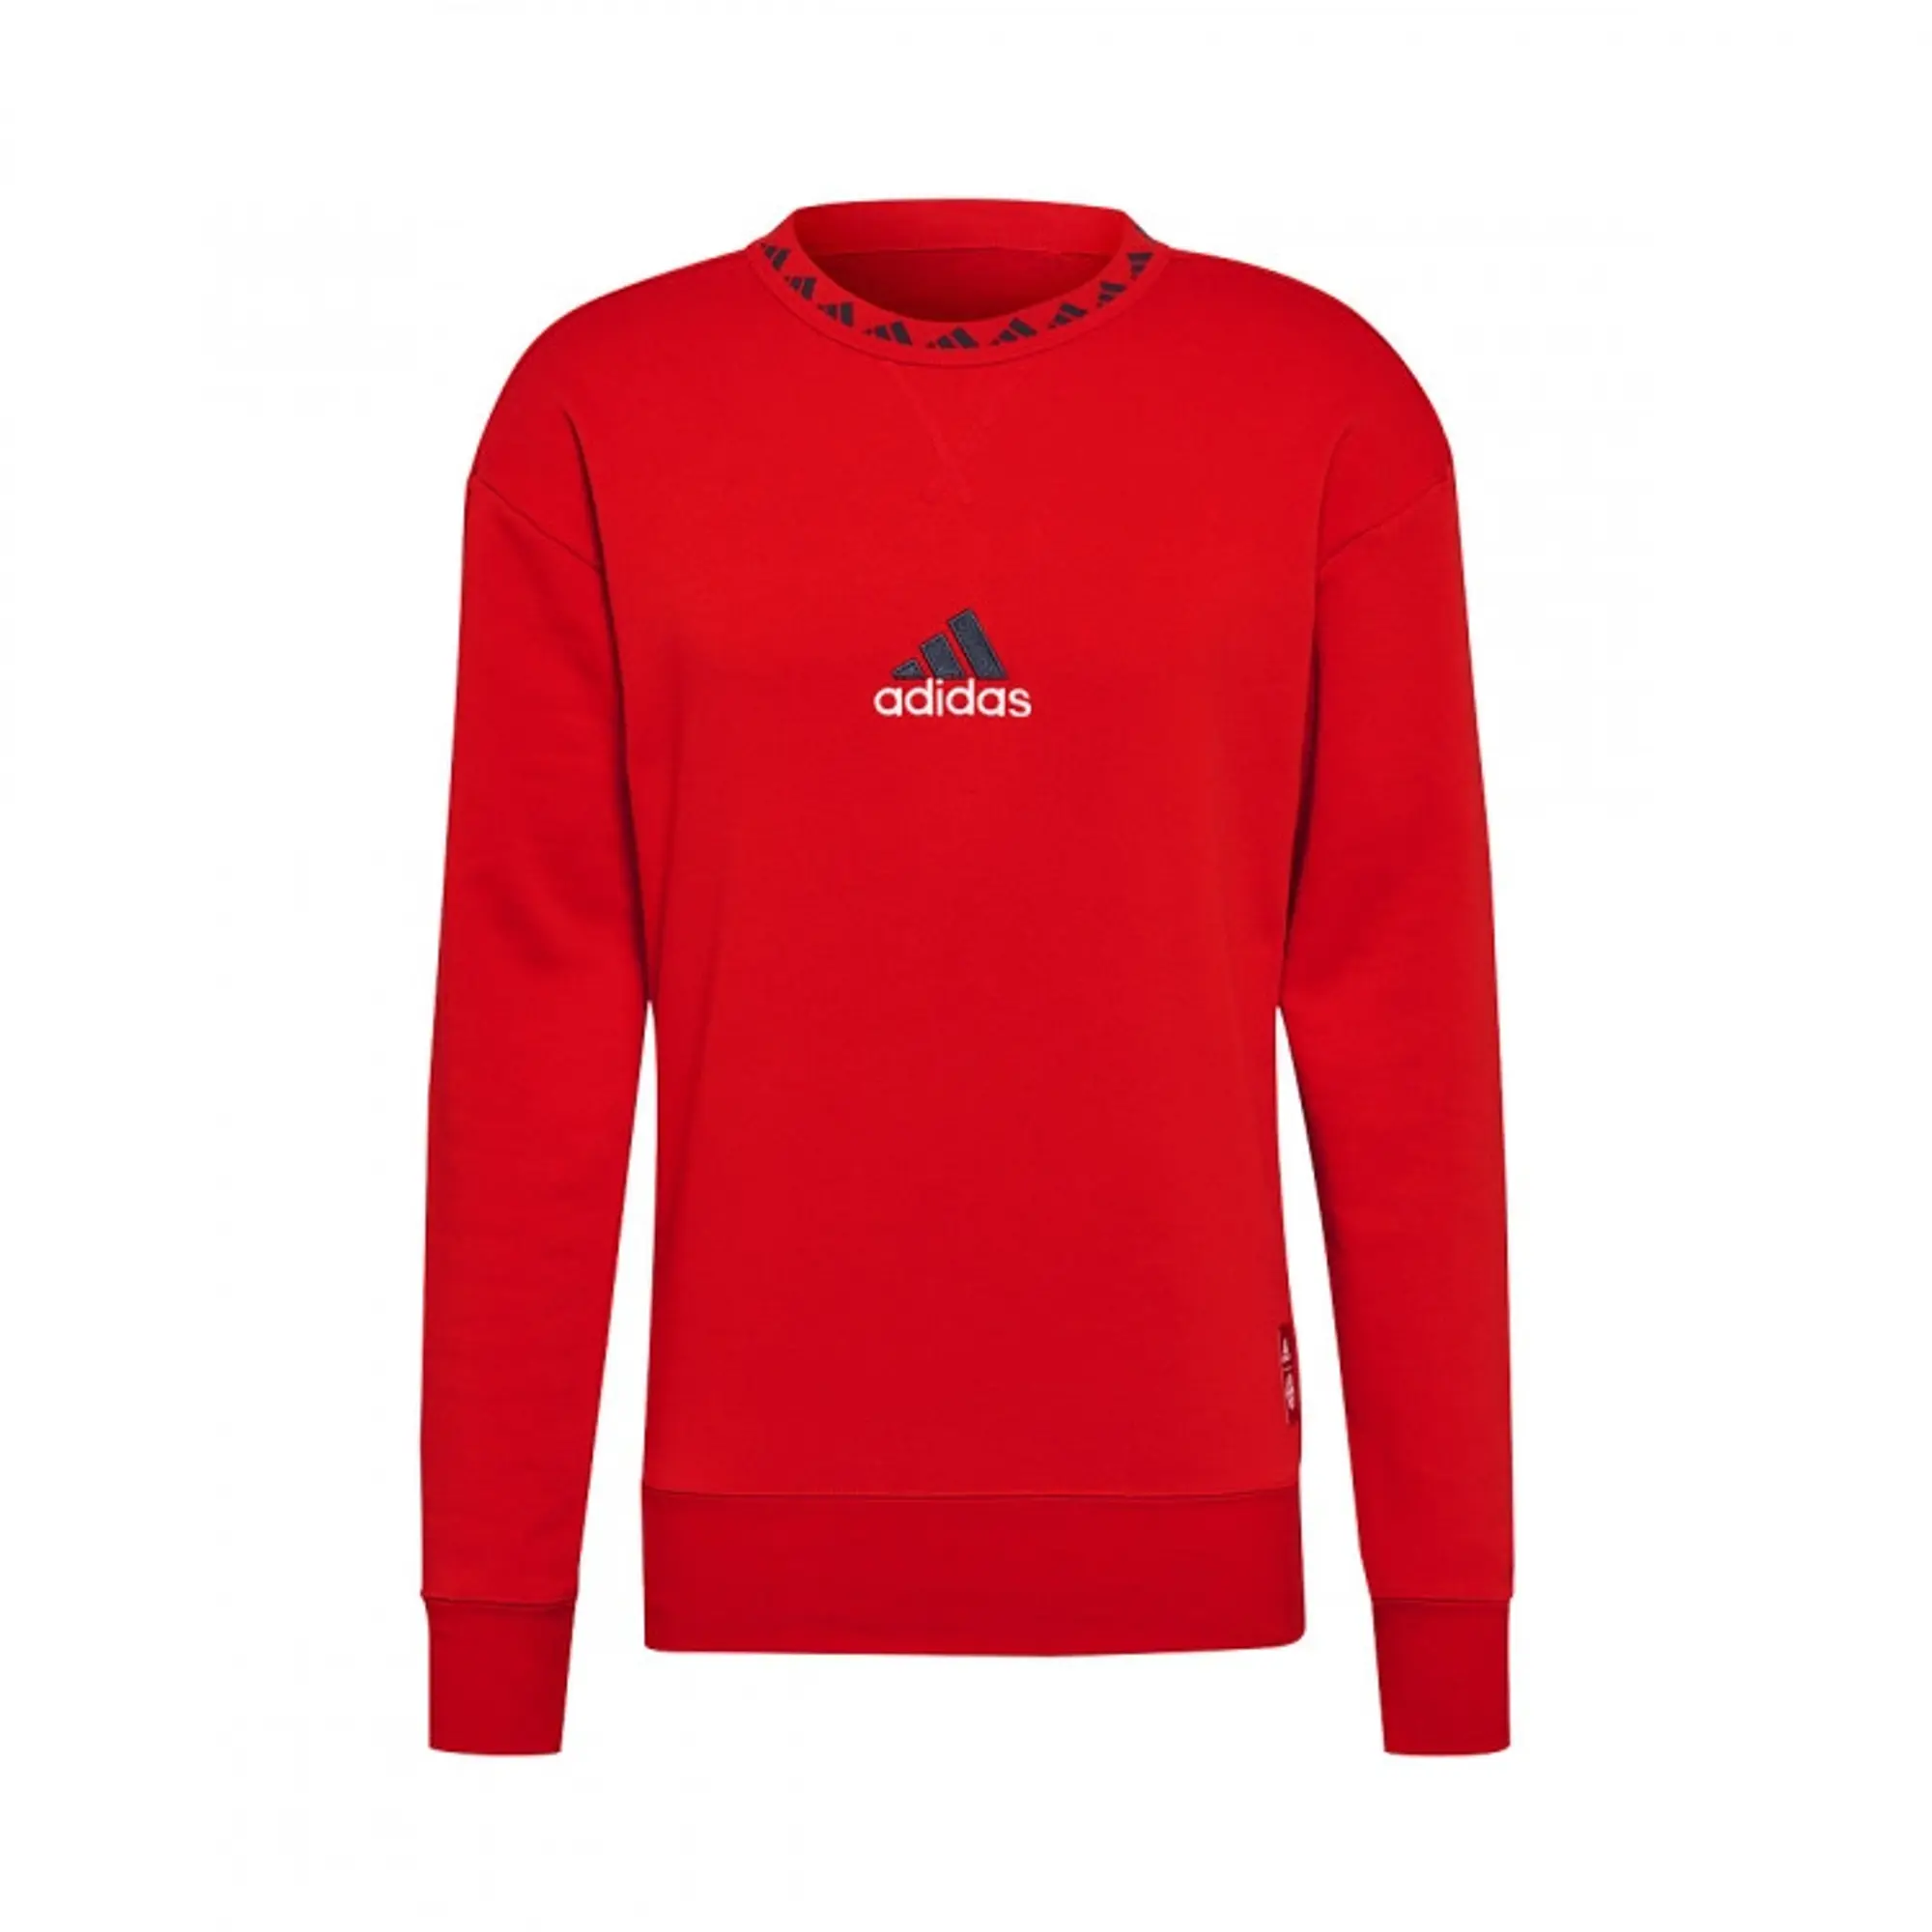 adidas Bayern München Sweatshirt Icon - Action Red - Red